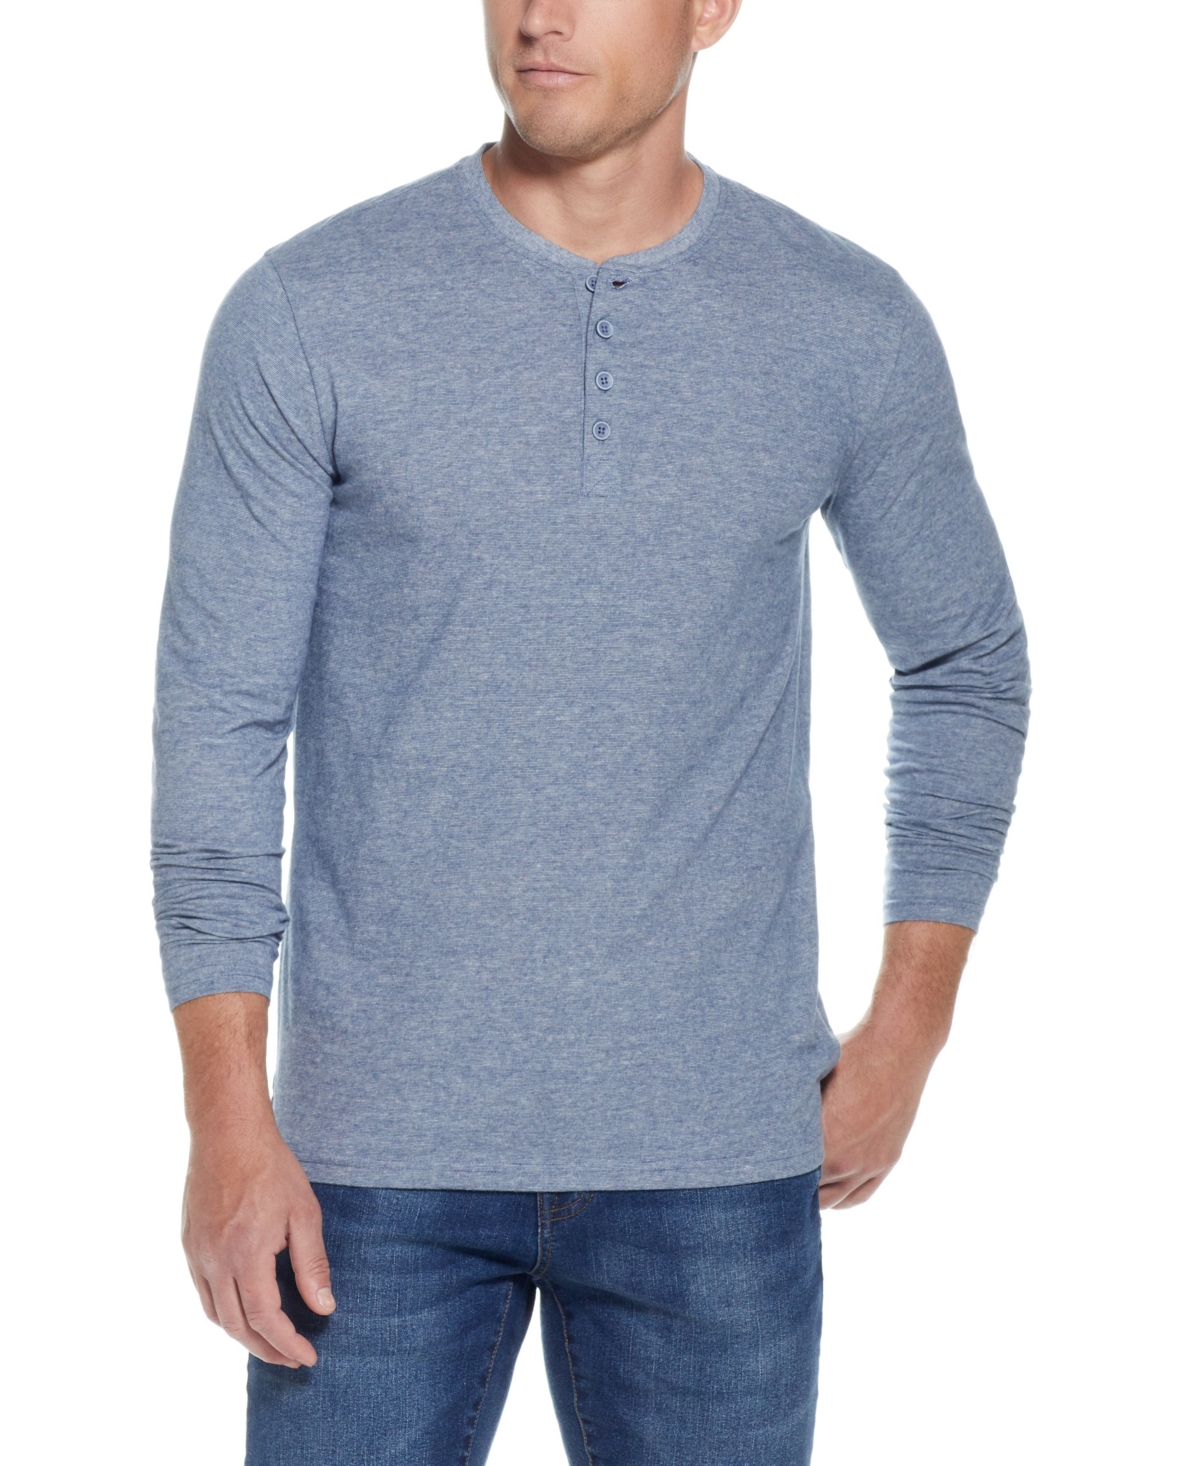 Men's Long Sleeve Sueded Microstripe Henley T-shirt - Lt Blue